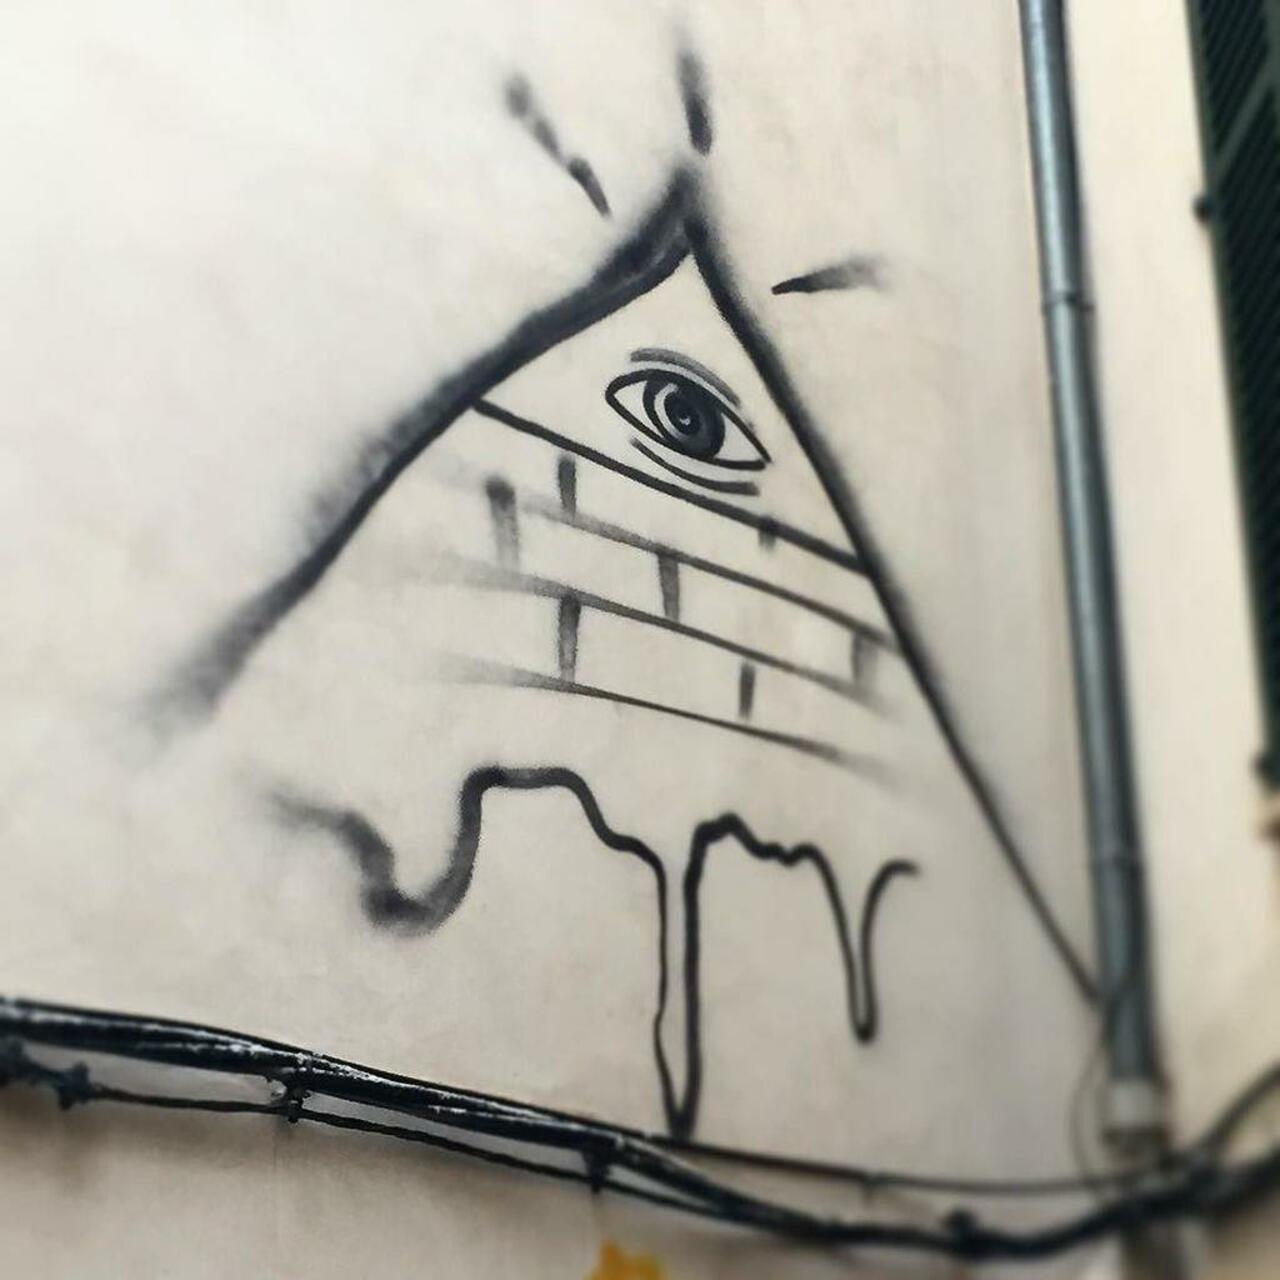 RT @artpushr: via #pixelhands "http://bit.ly/1Vvti3w" #graffiti #streetart http://t.co/ETmm0VP8ws